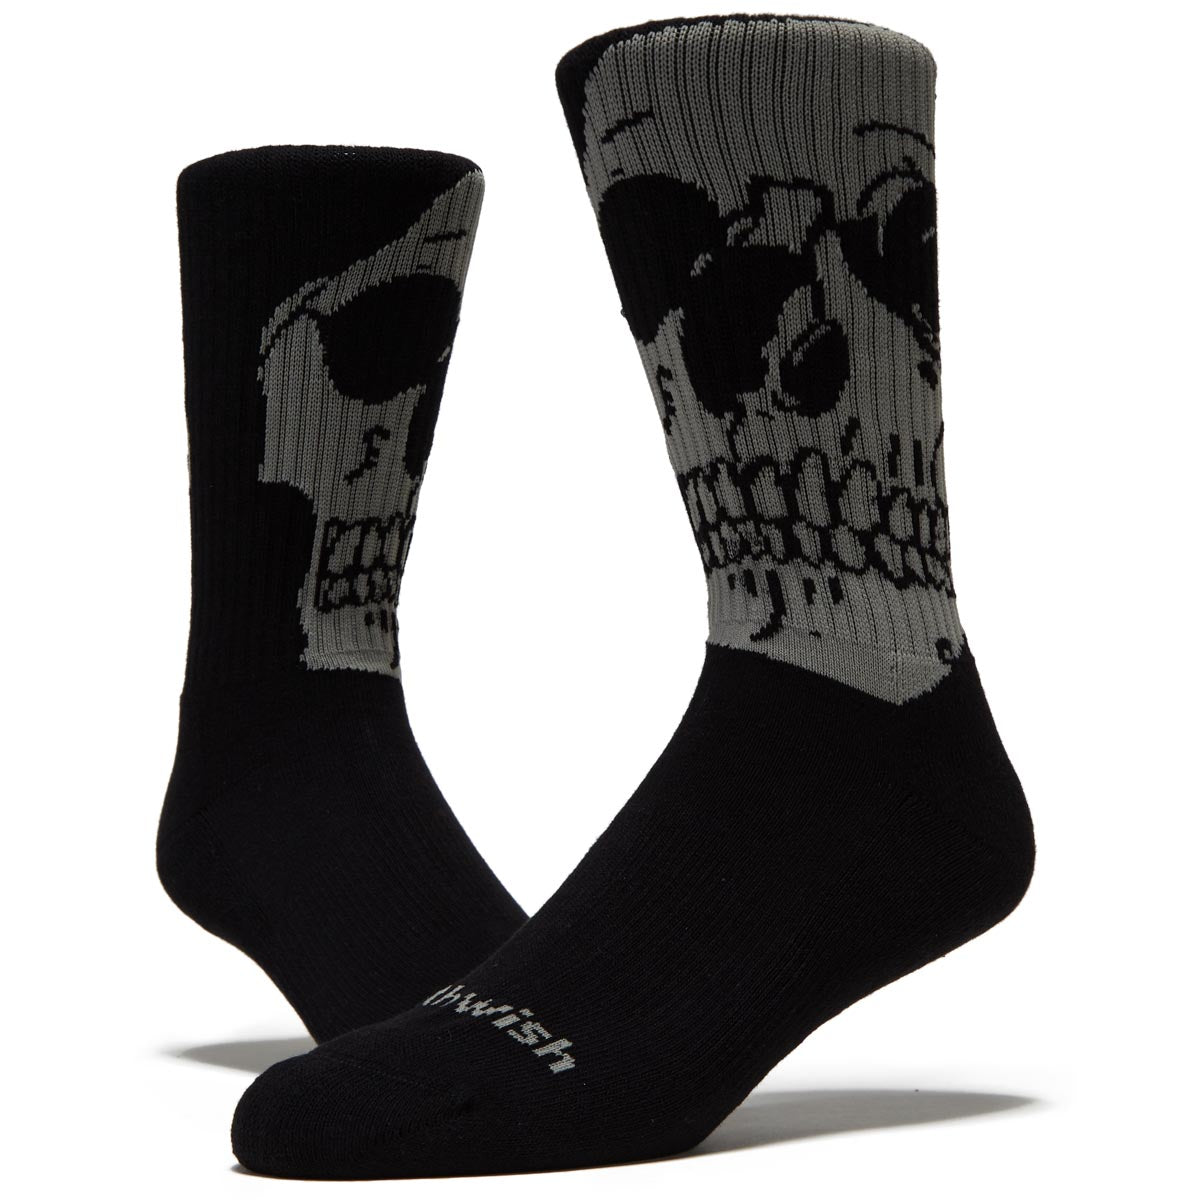 Deathwish Death In Disguise Socks - Black image 2